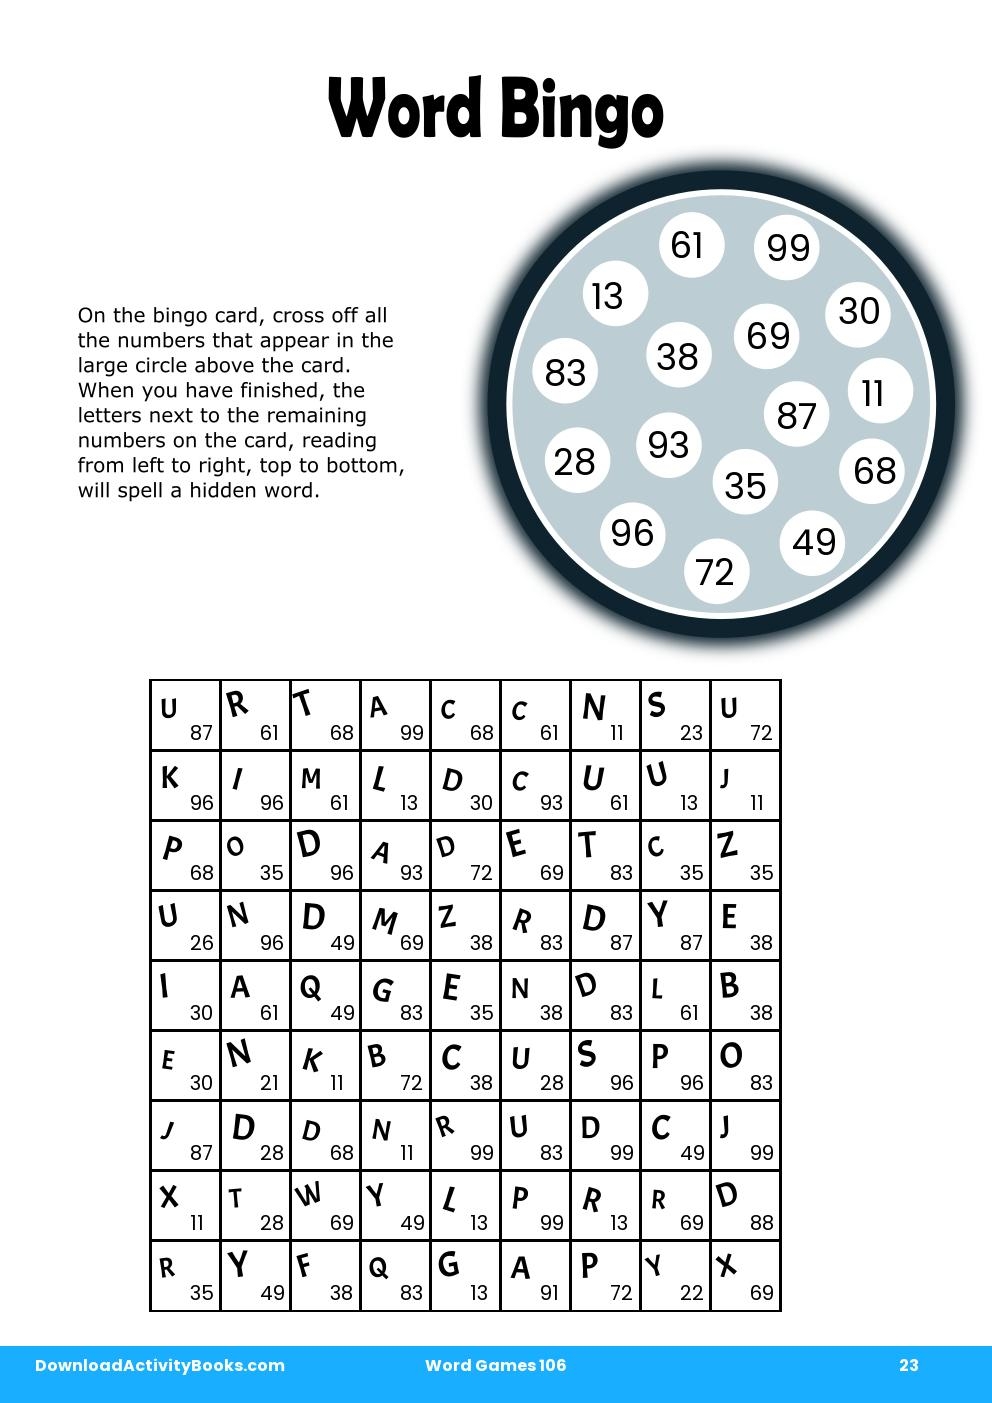 Word Bingo in Word Games 106